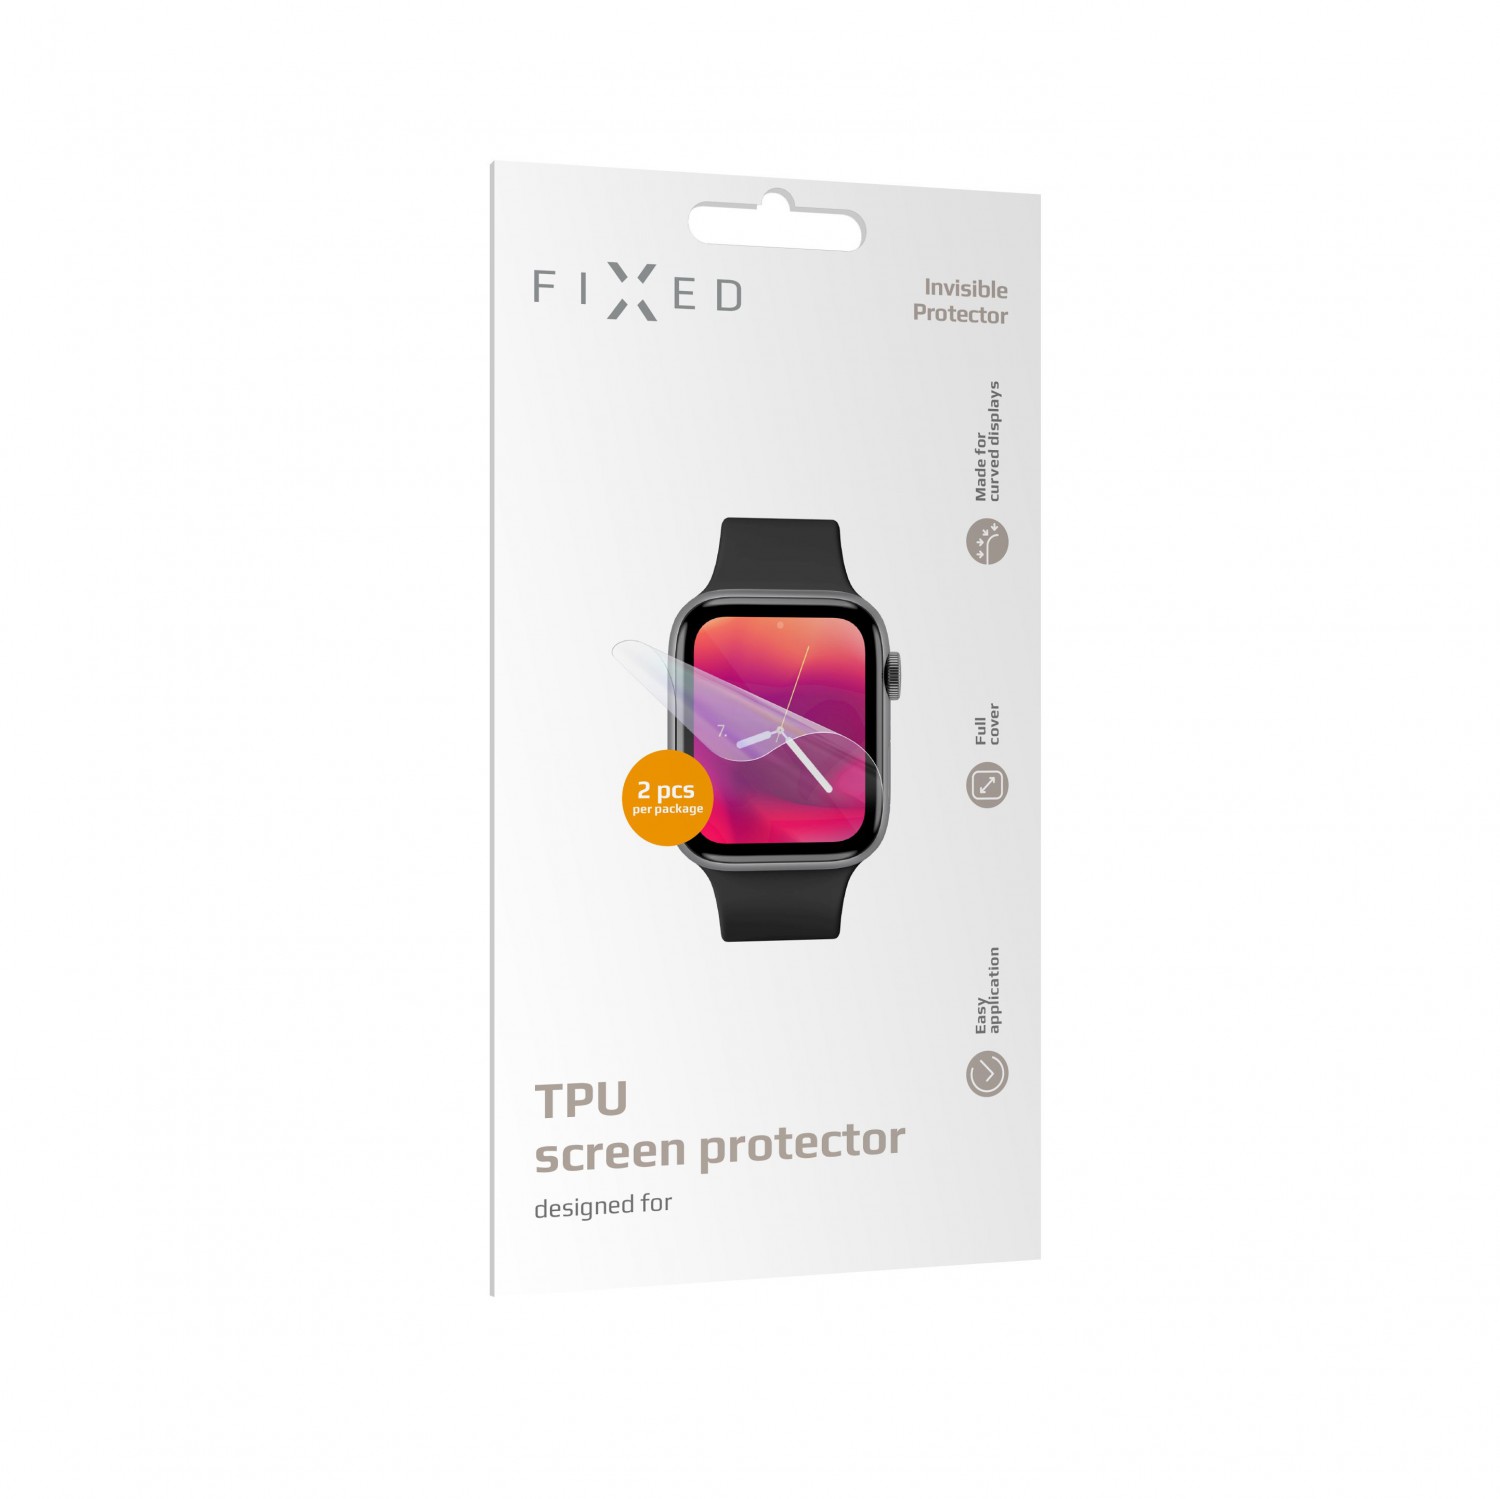 Silikonová folie FIXED Invisible Protector pro Xiaomi Mi Band 5 (2ks), čirá